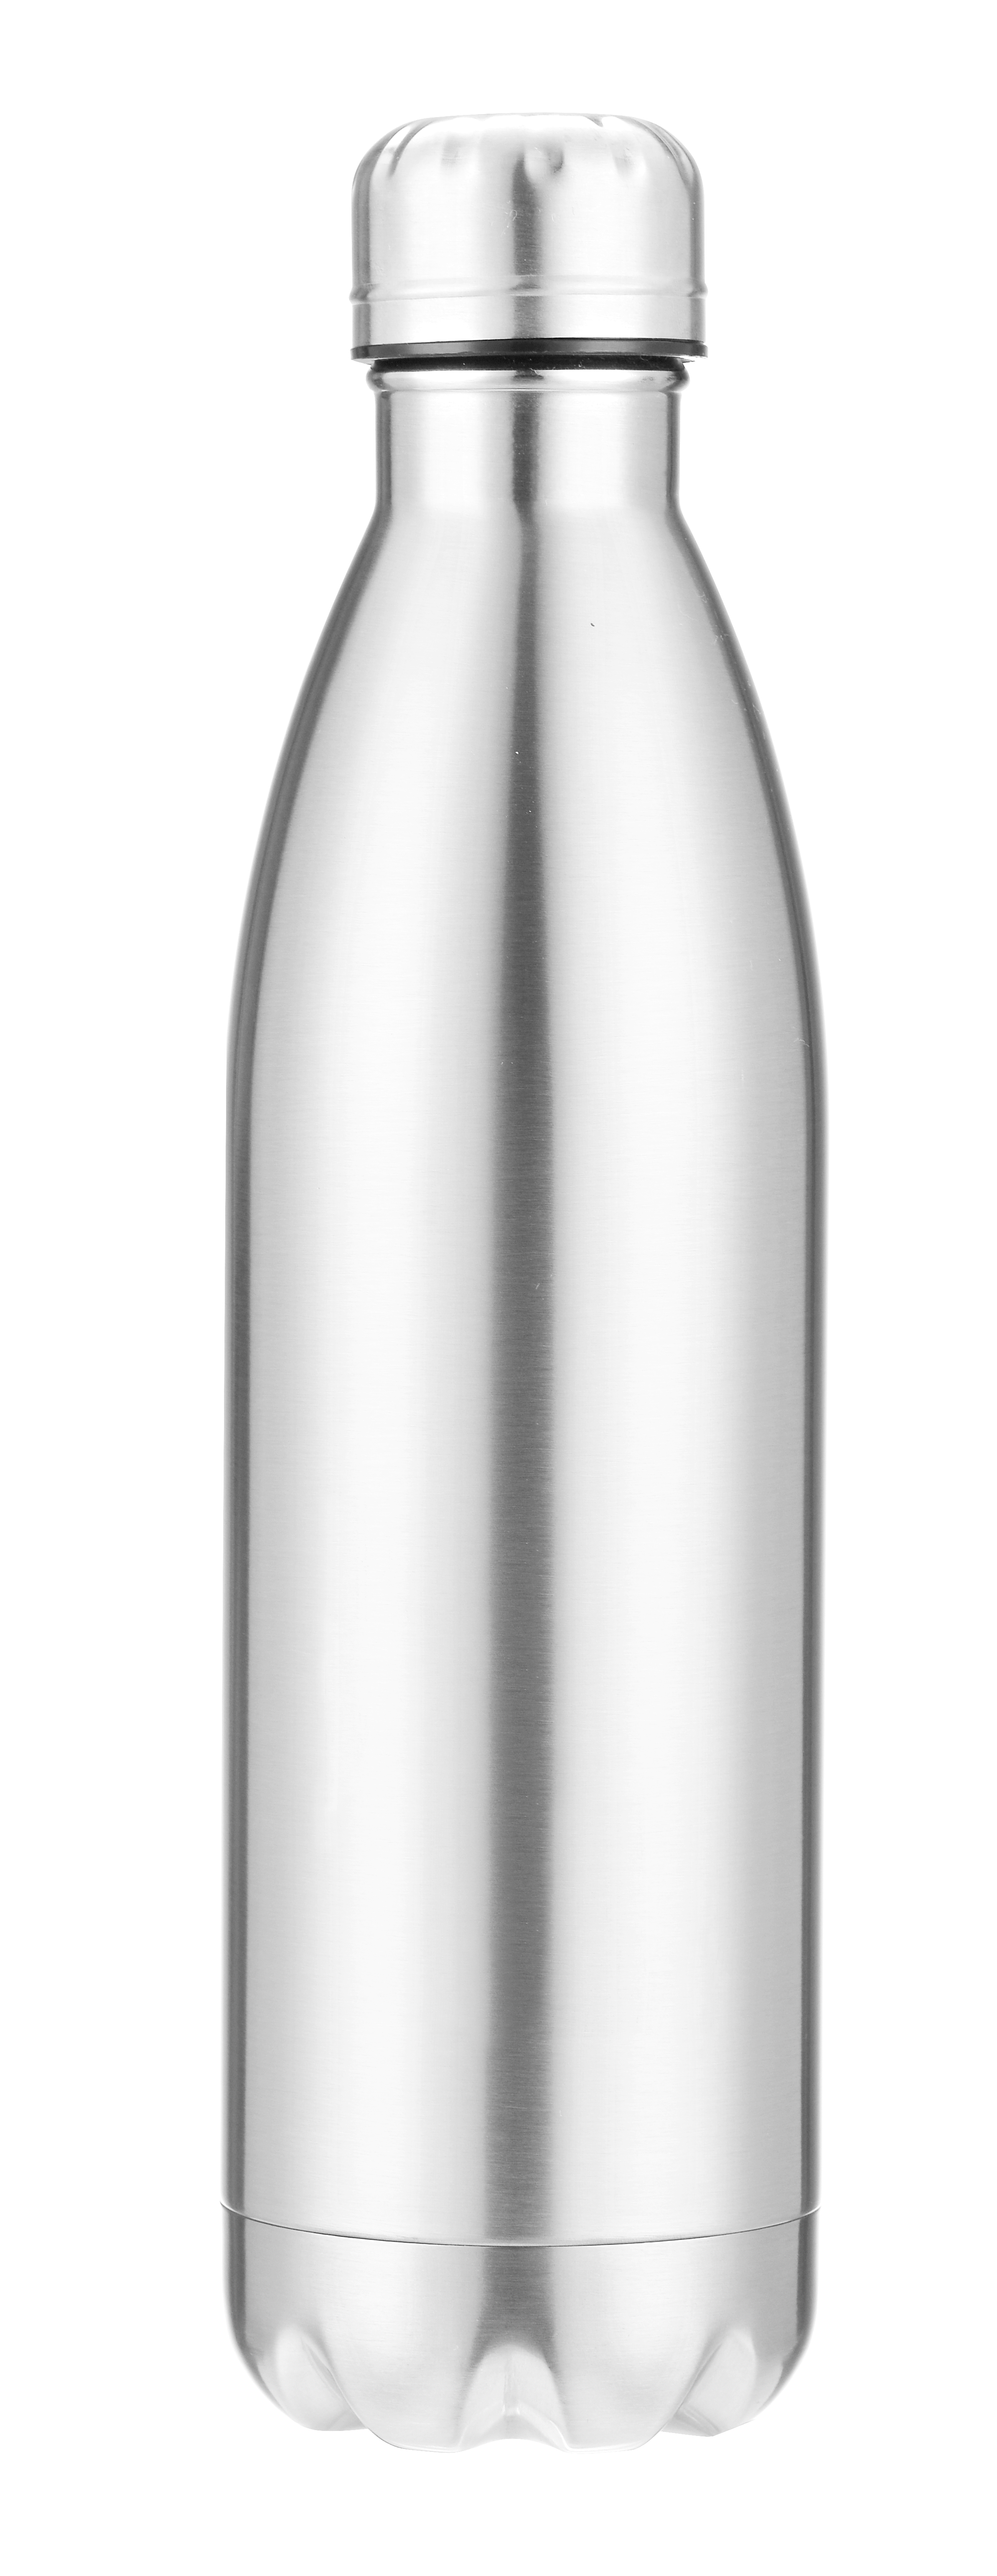 TRIO vacuum flask 500ml brushed stainless steel